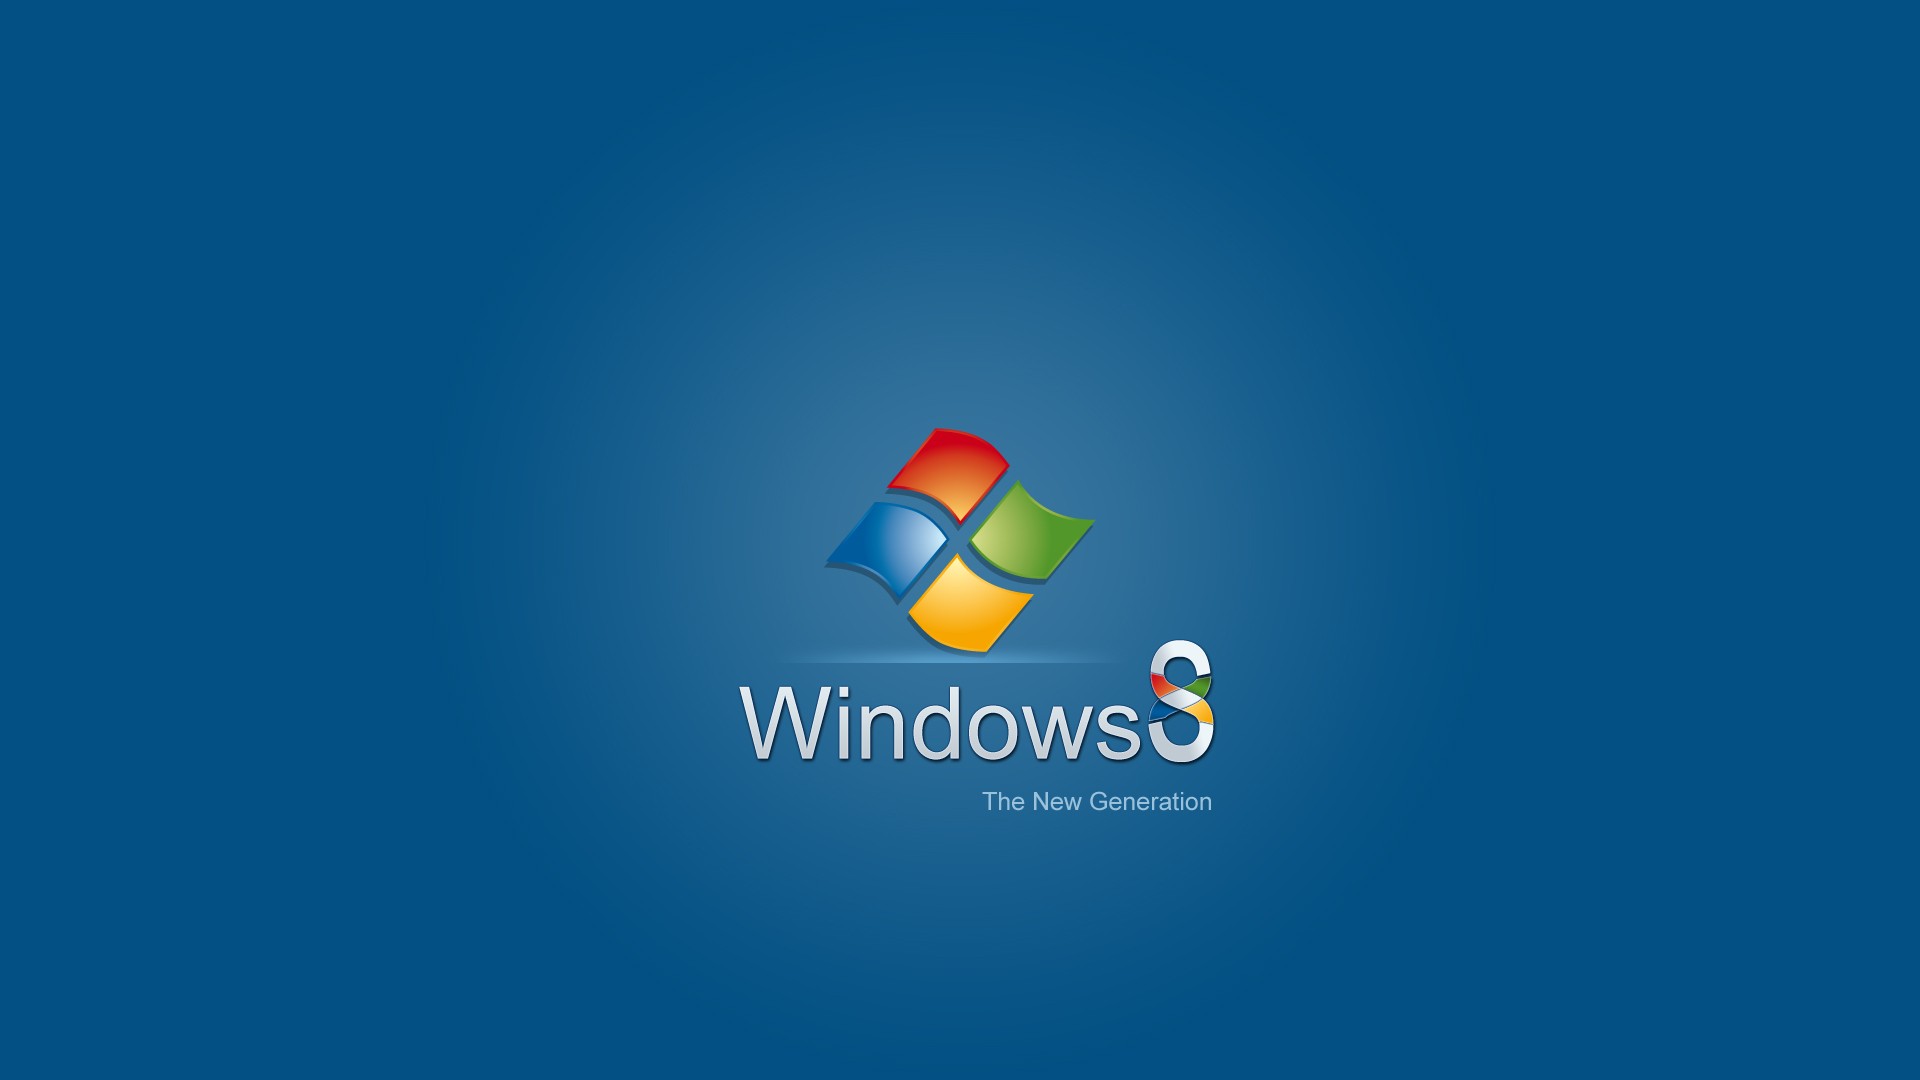 Windows 8 Wallpapers Windows 8 Myspace Backgrounds Windows 8 1920x1080